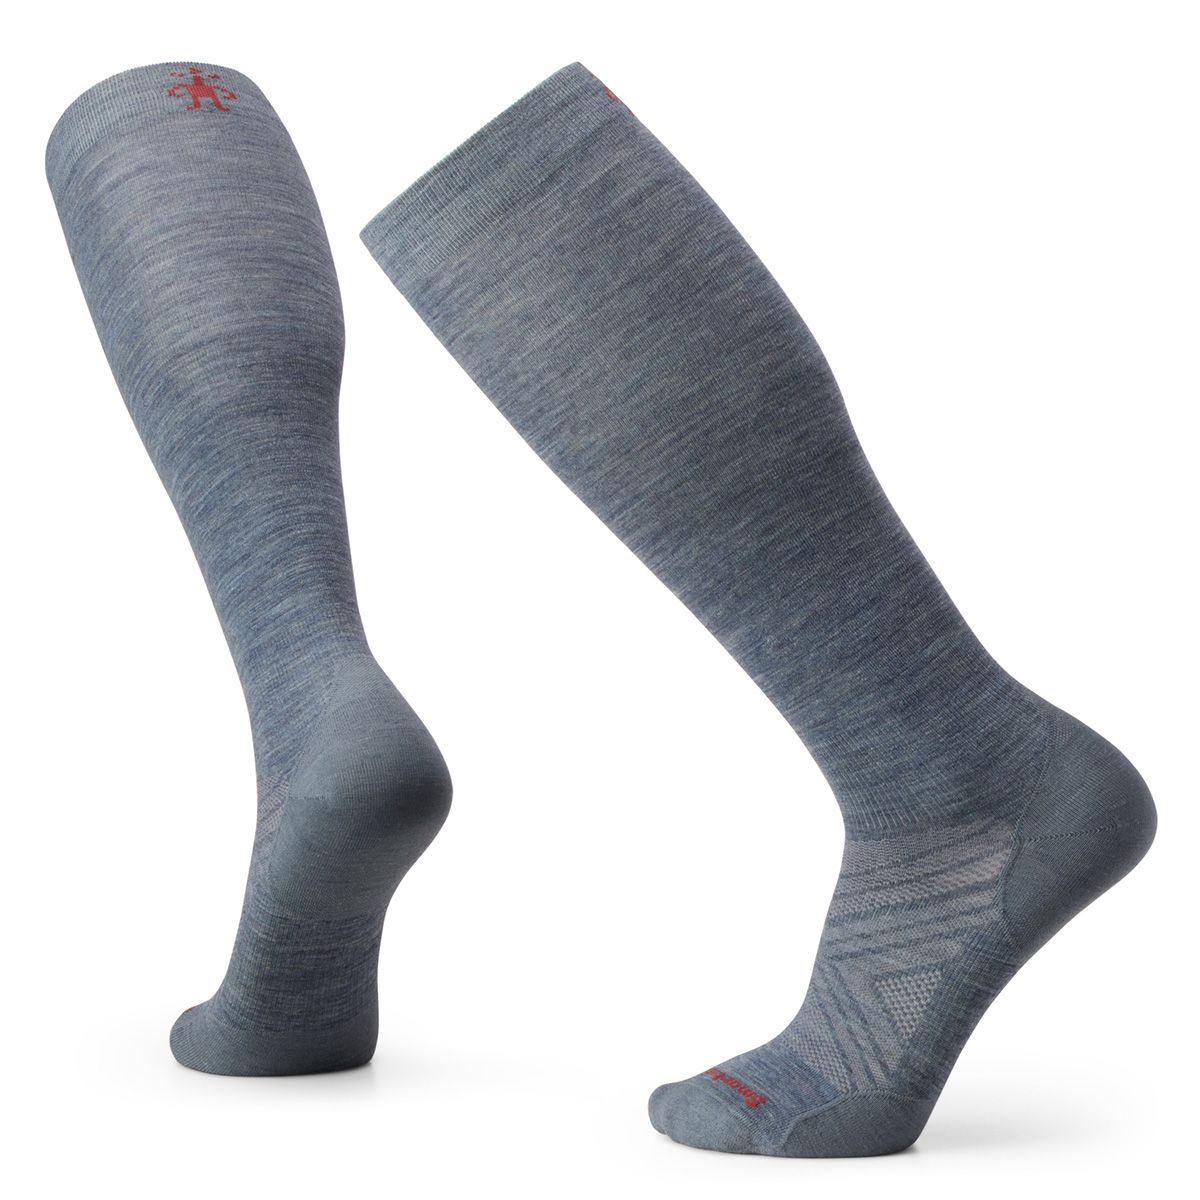 Slouch Wool Socks, Plus Size for Men Wide Feet, Gift for Elderly -   Canada